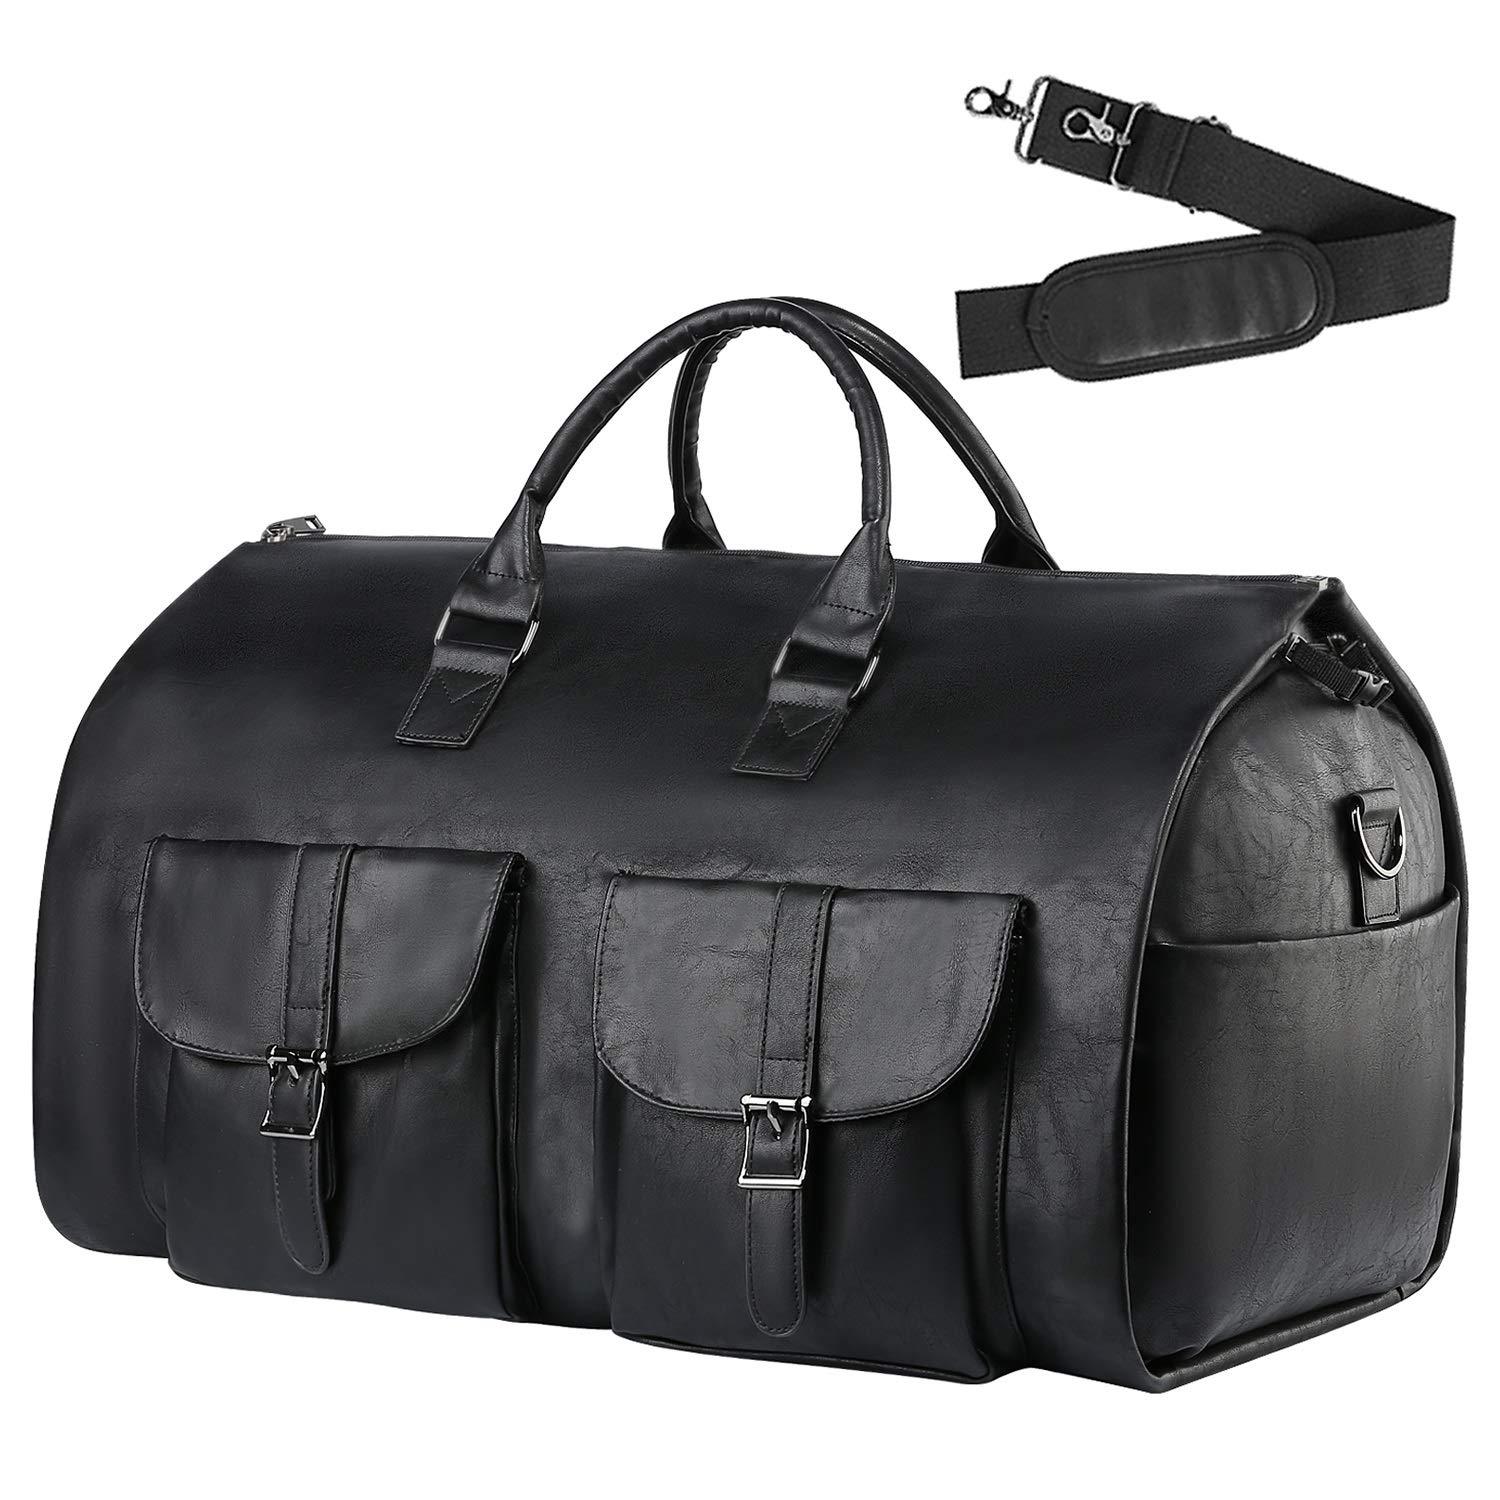 In stock new convertible travel bag clothing bag luggage bag 2 in 1 hanging handbag suit business travel bag